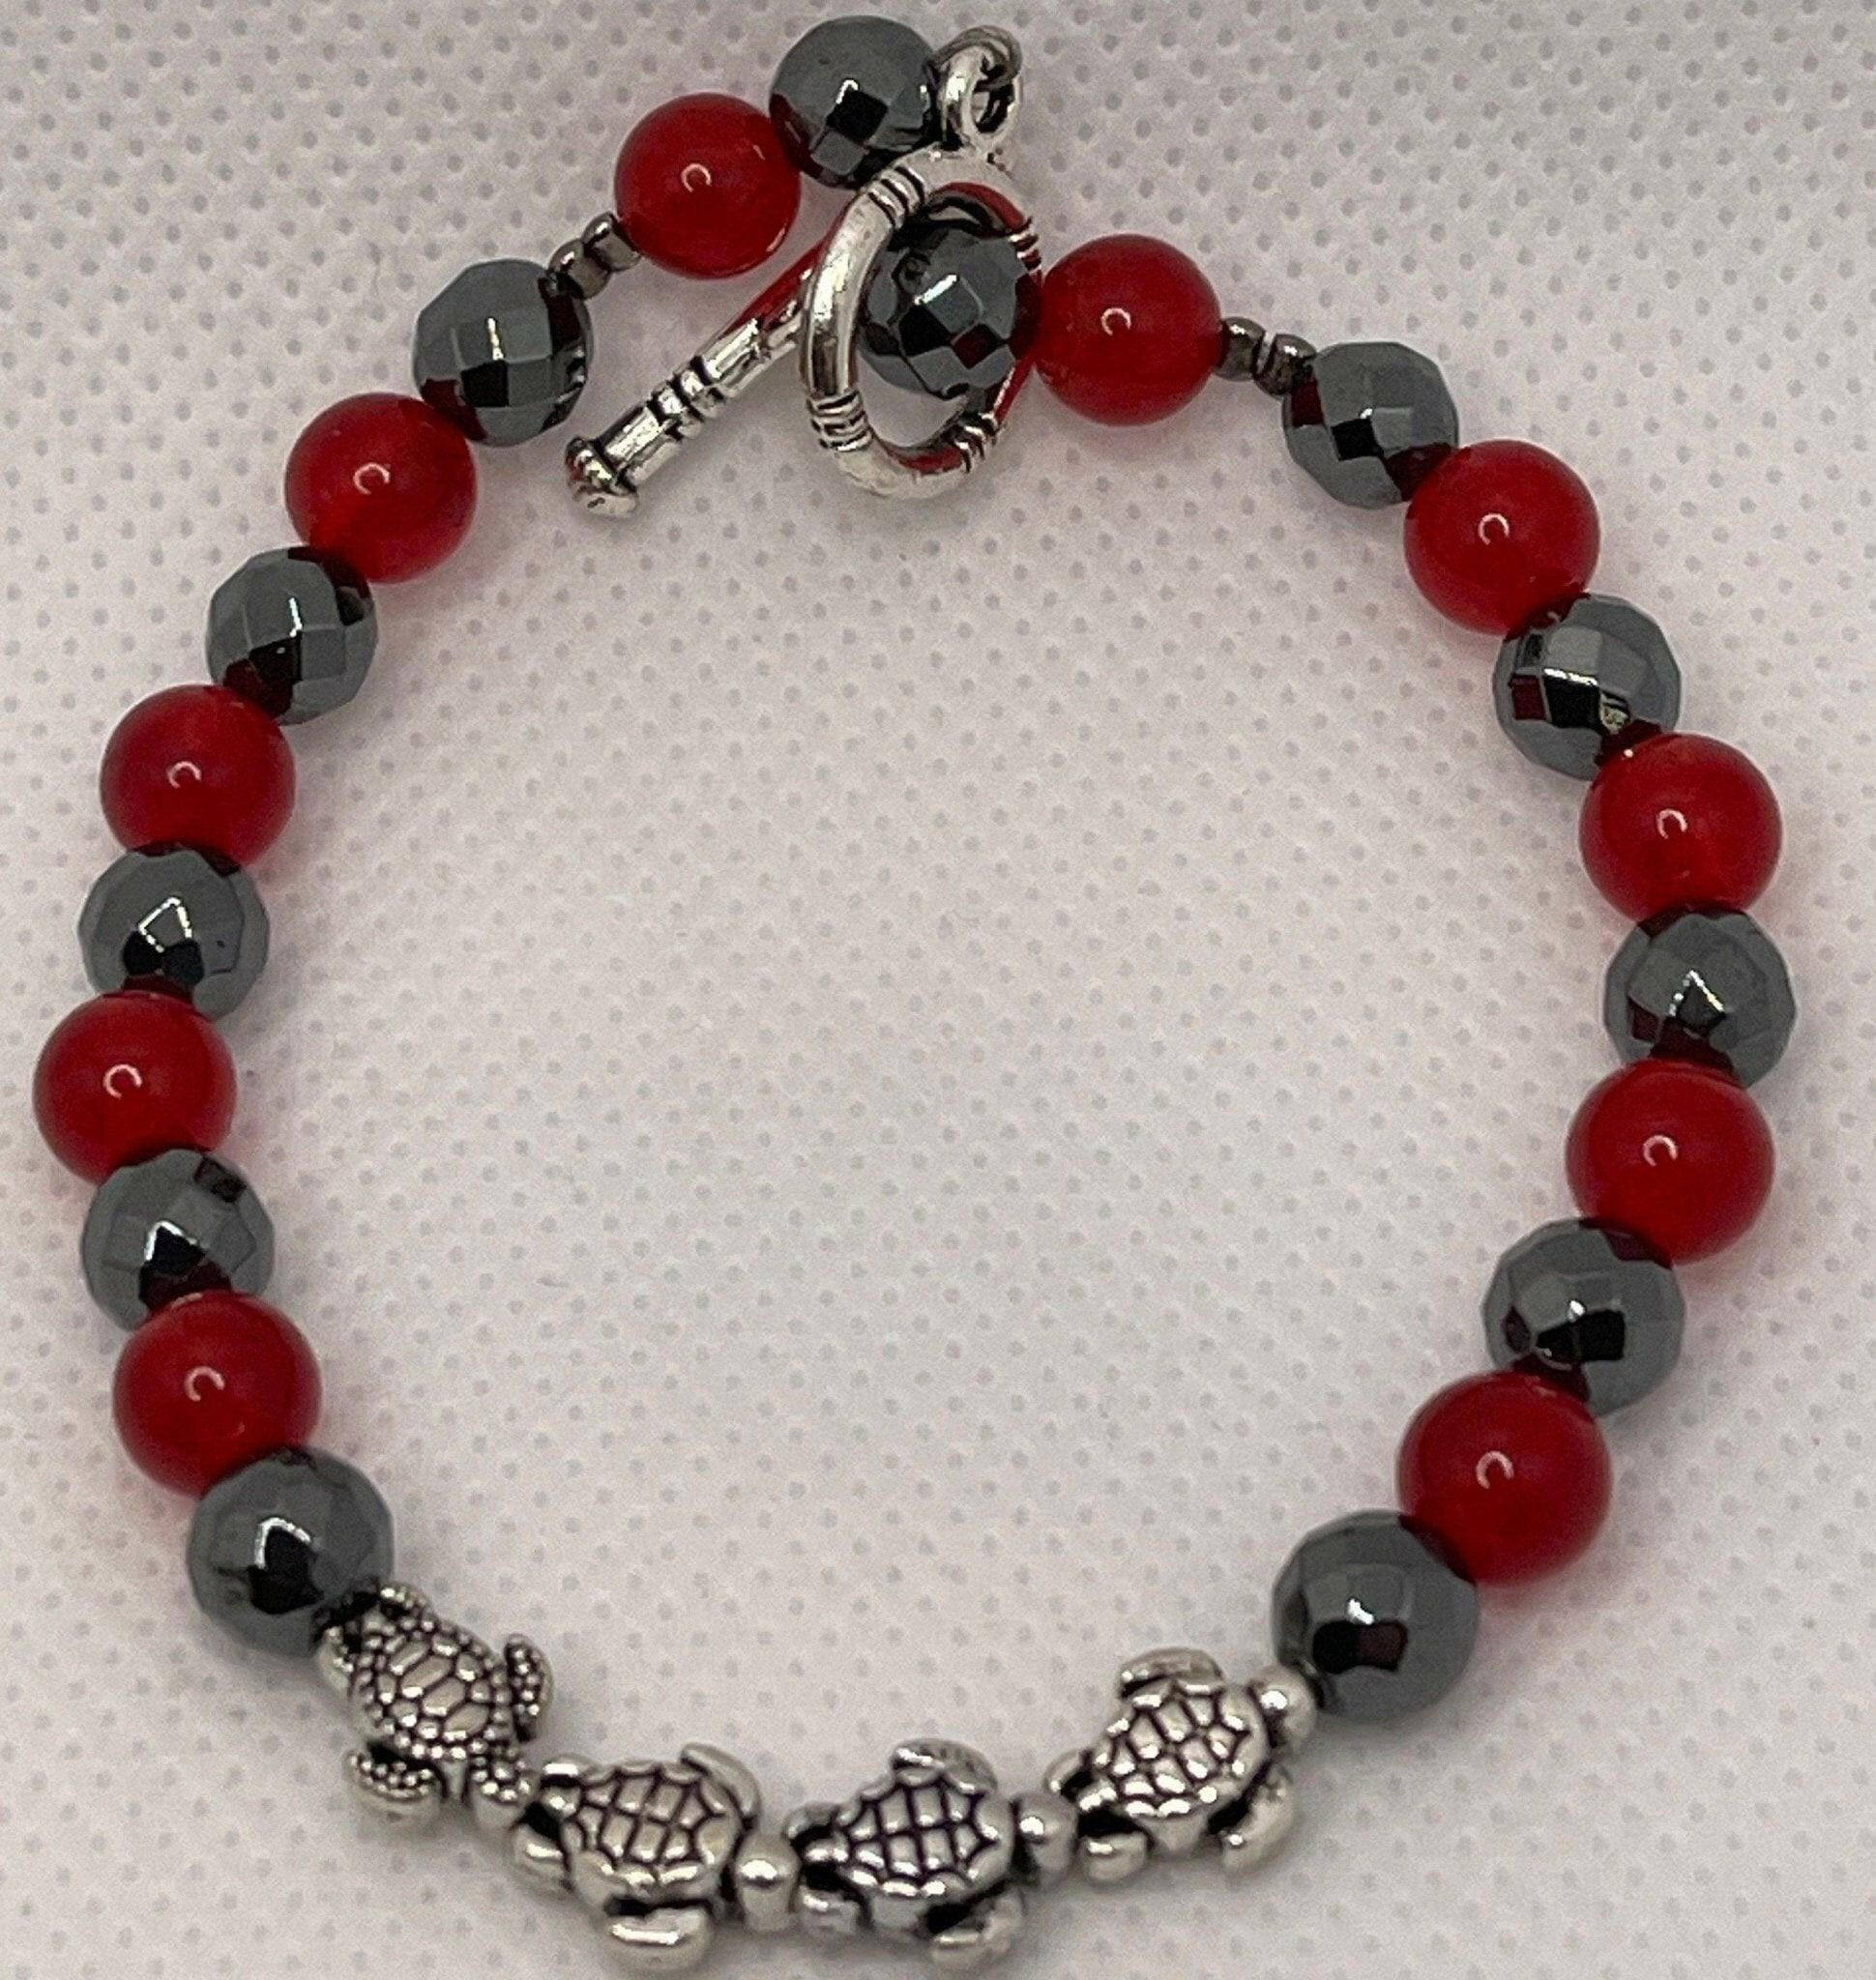 Bec Sue Jewelry Shop turtle bracelet 6.5 / red / silver turtle/hematite/red coral beads Turtle Bracelet, Red coral bamboo Bracelet Tags 178